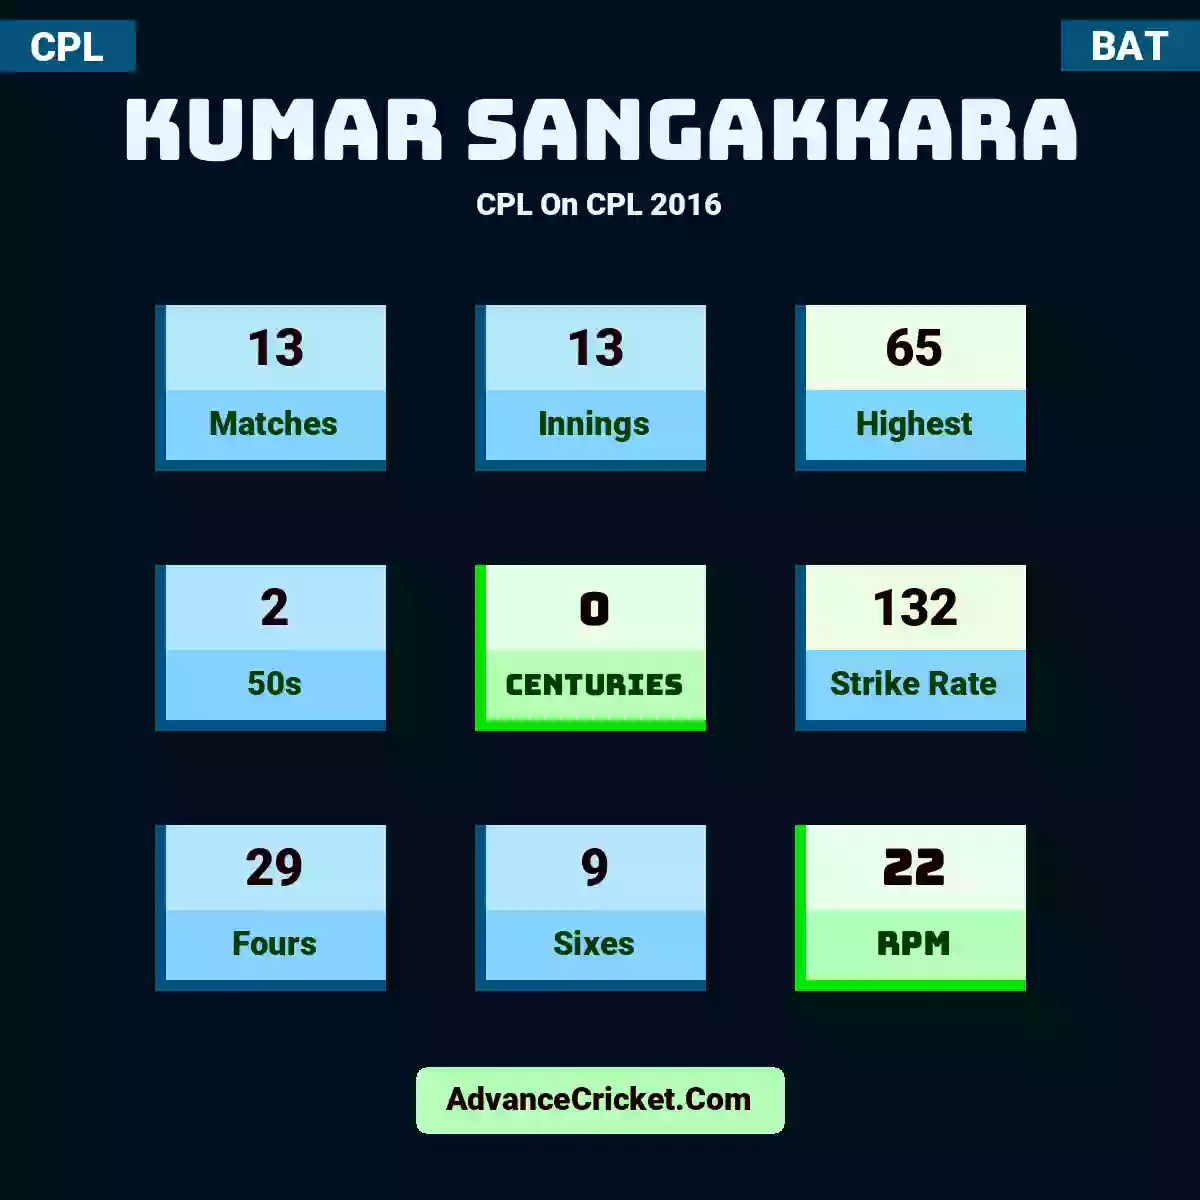 Kumar Sangakkara CPL  On CPL 2016, Kumar Sangakkara played 13 matches, scored 65 runs as highest, 2 half-centuries, and 0 centuries, with a strike rate of 132. K.Sangakkara hit 29 fours and 9 sixes, with an RPM of 22.